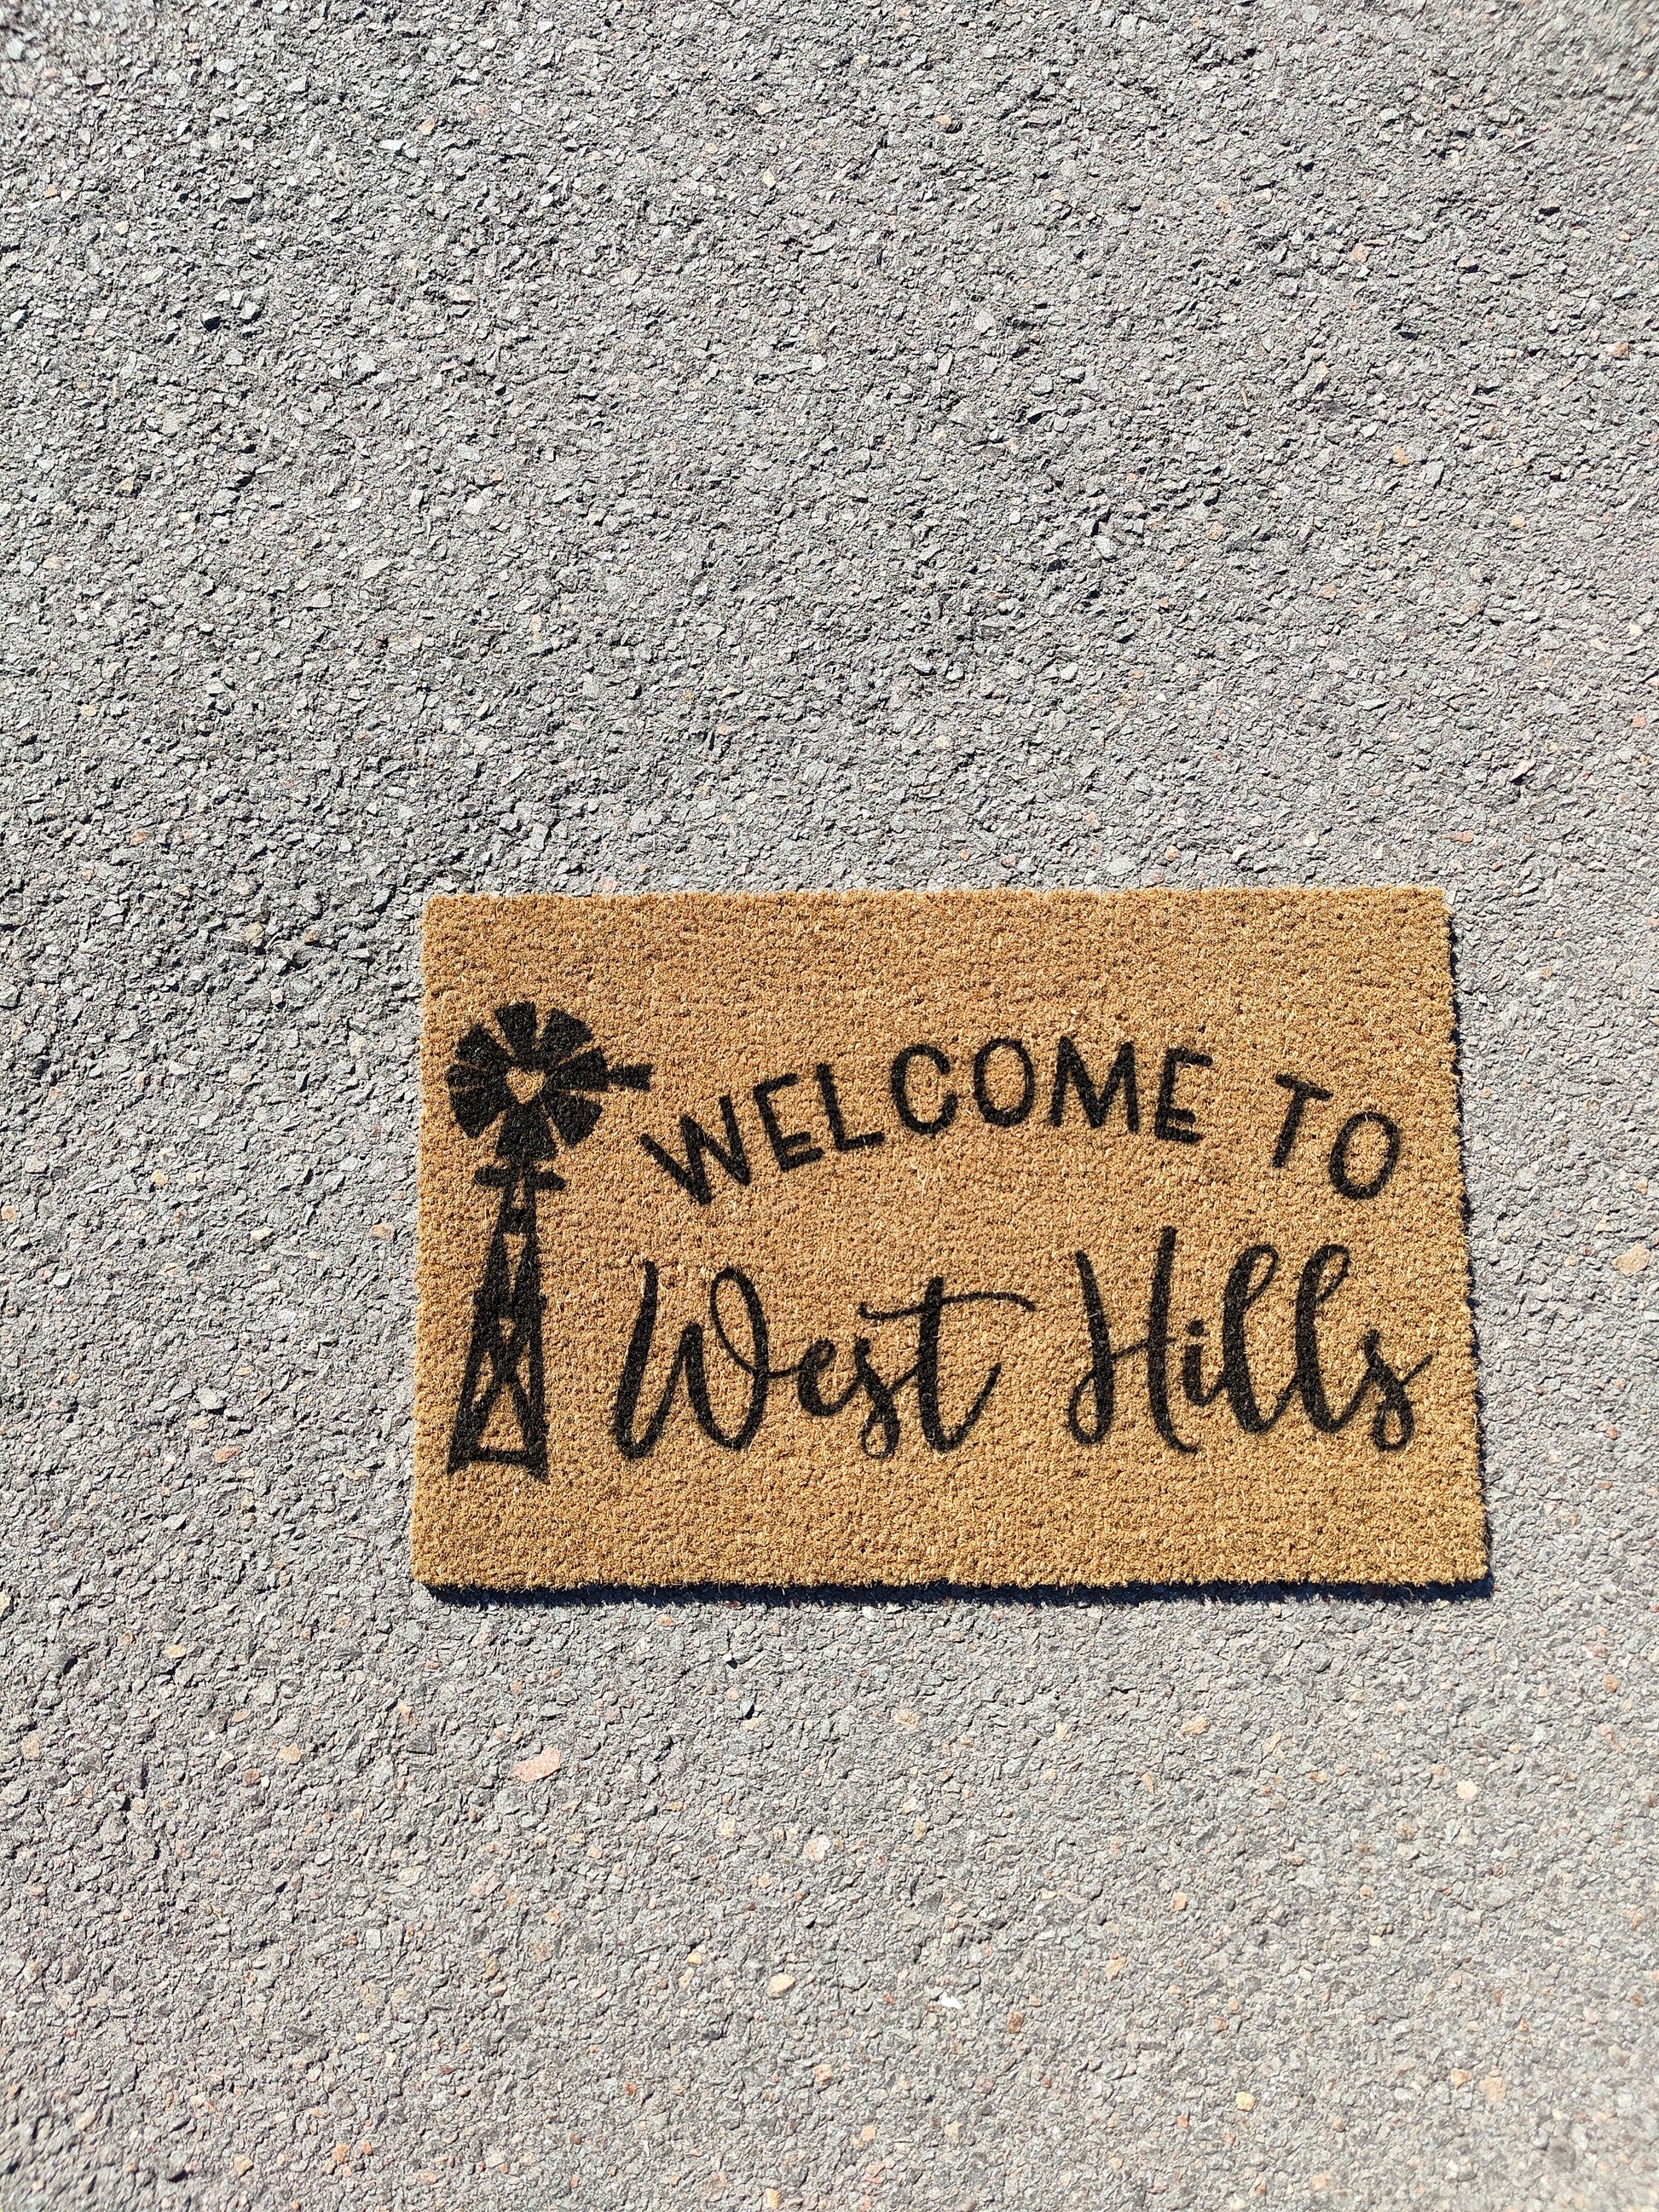 Windmill Farm personalised Doormat - Personalised Doormat Australia